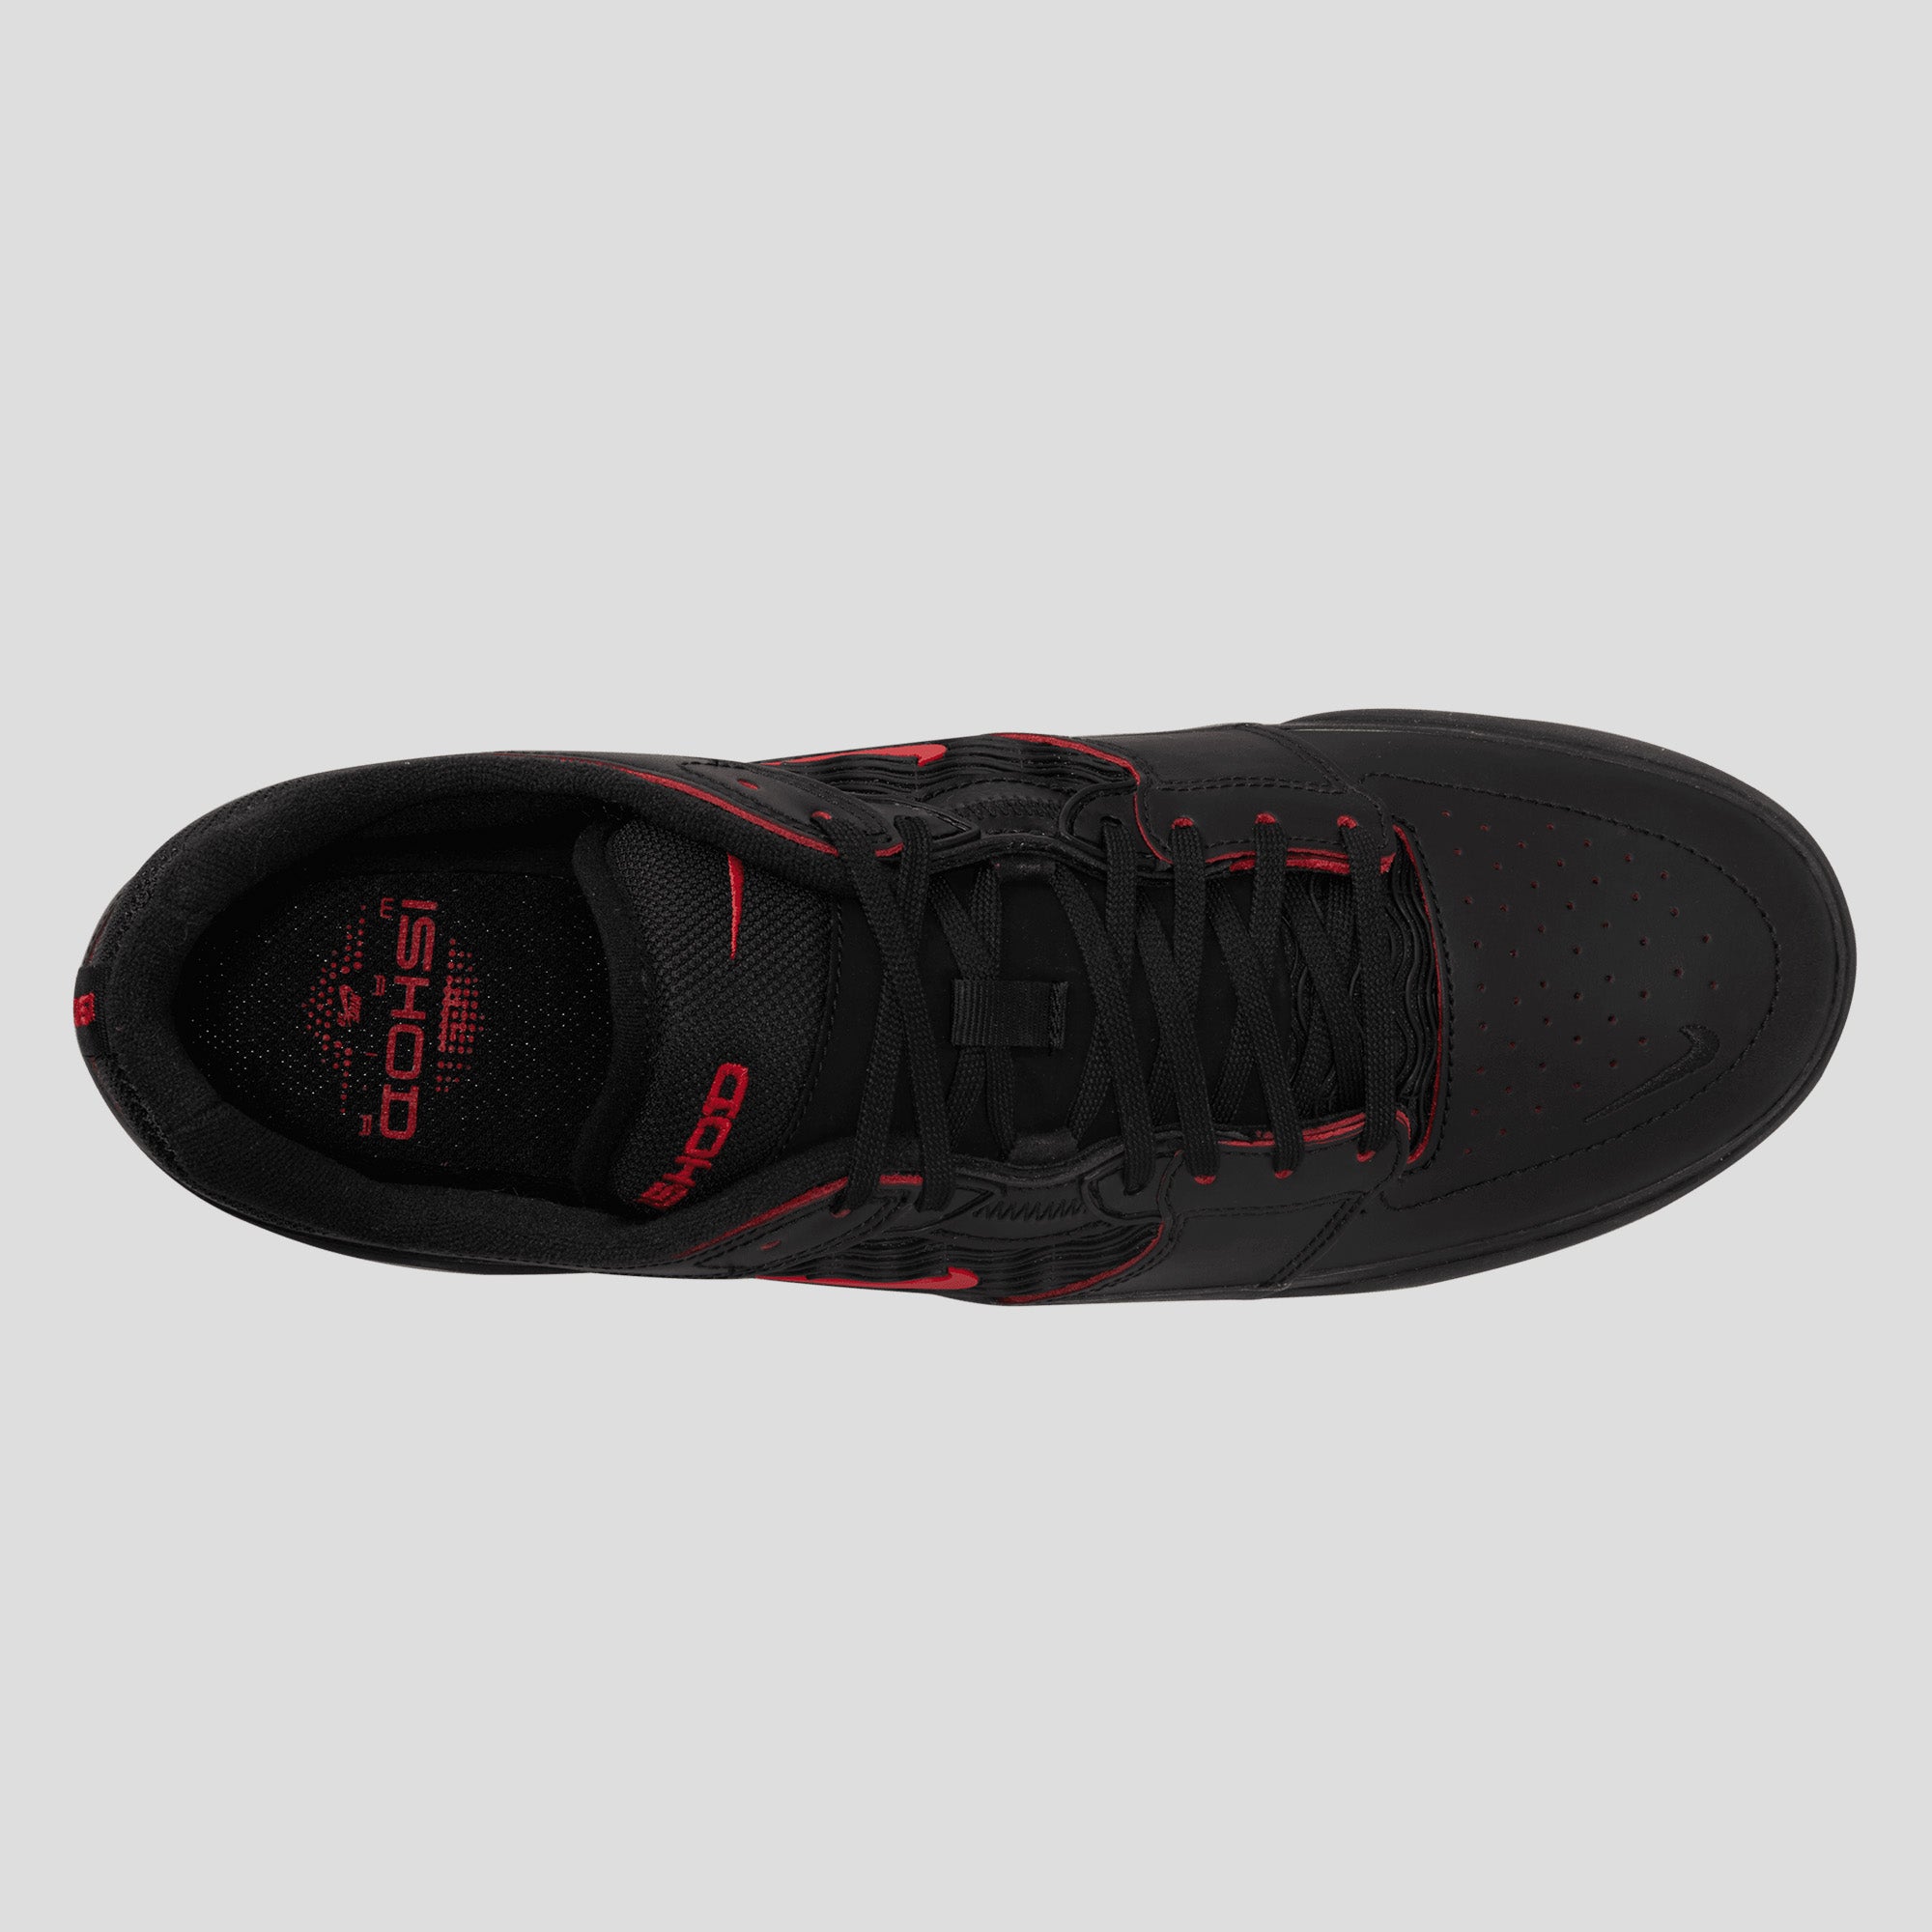 Nike SB Ishod - Black / University Red / Black